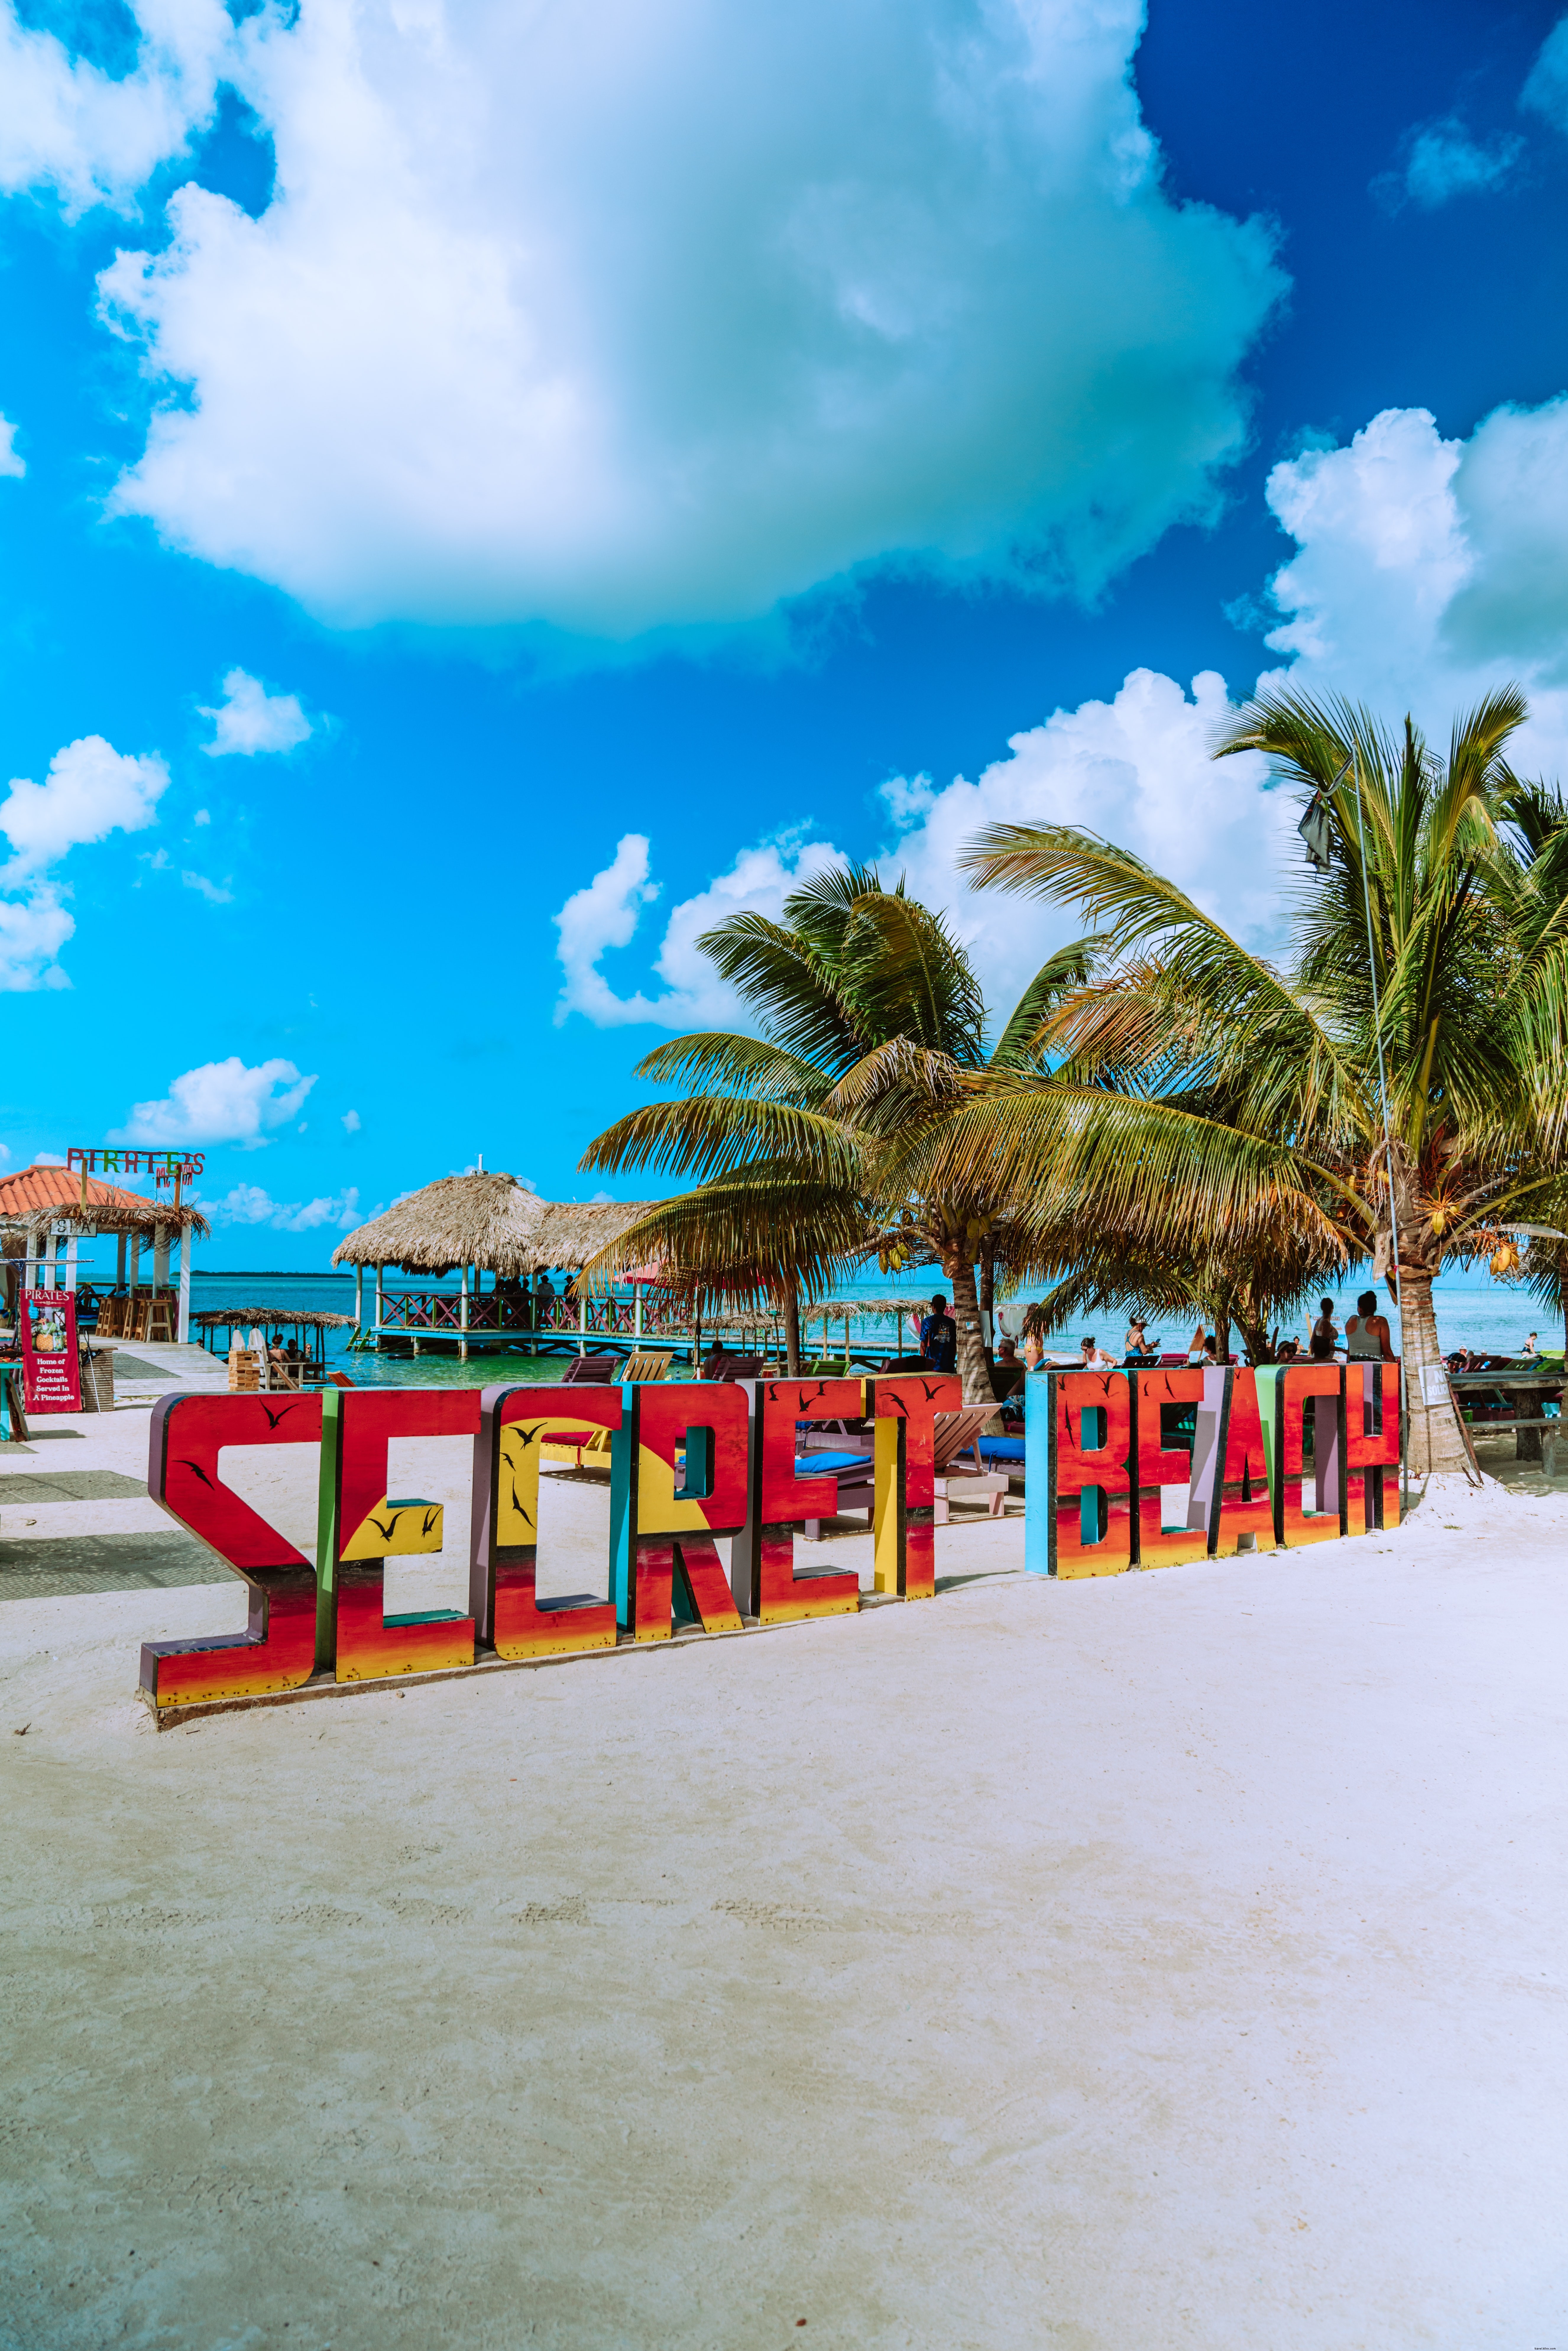 Spiaggia segreta Belize, San Pietro, Belize 